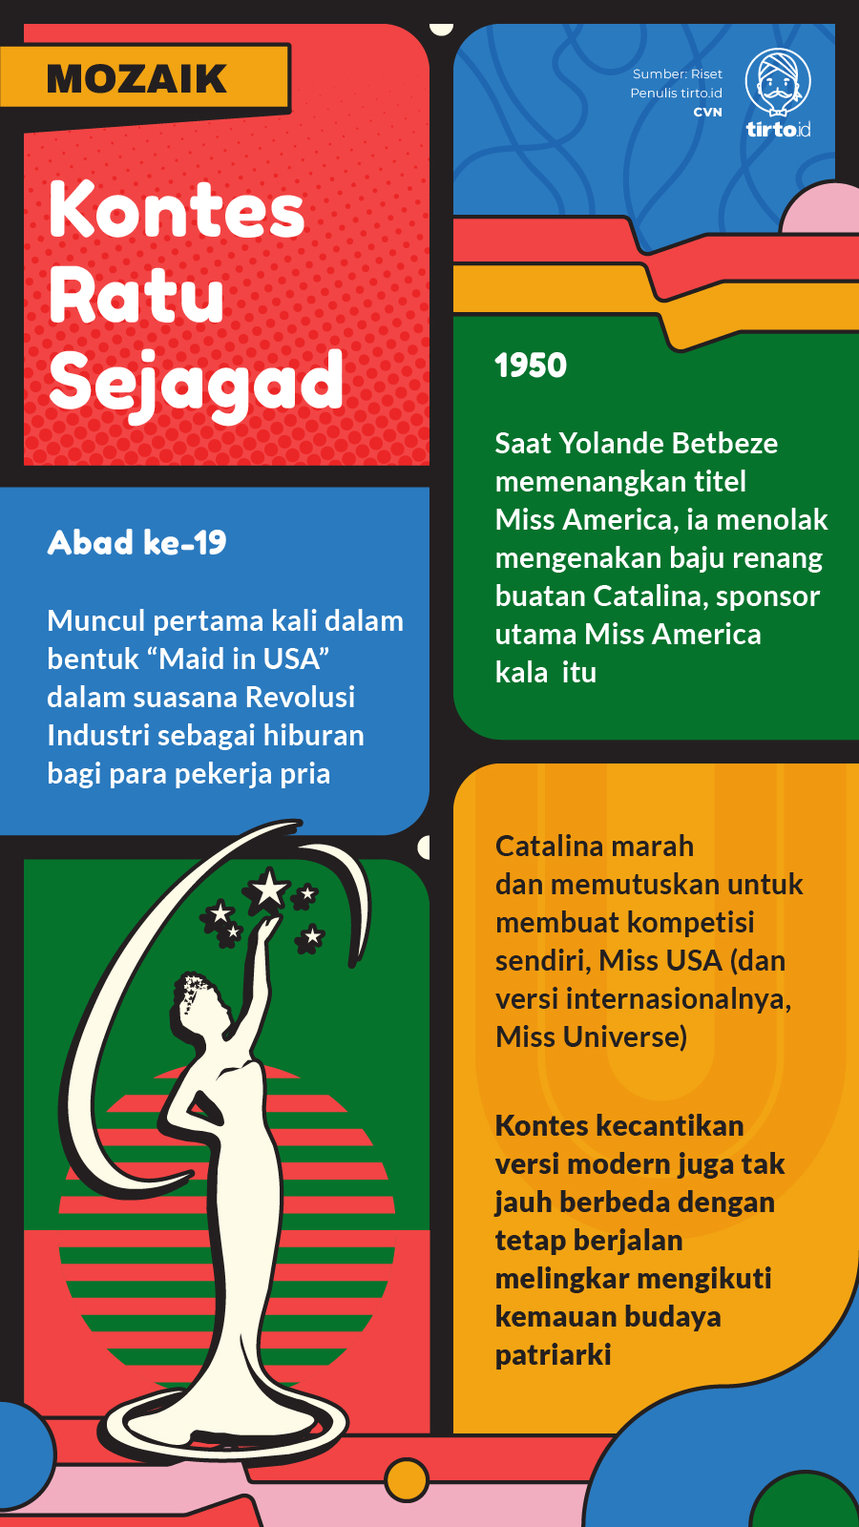 Infografik Mozaik Kontes Ratu Sejagad